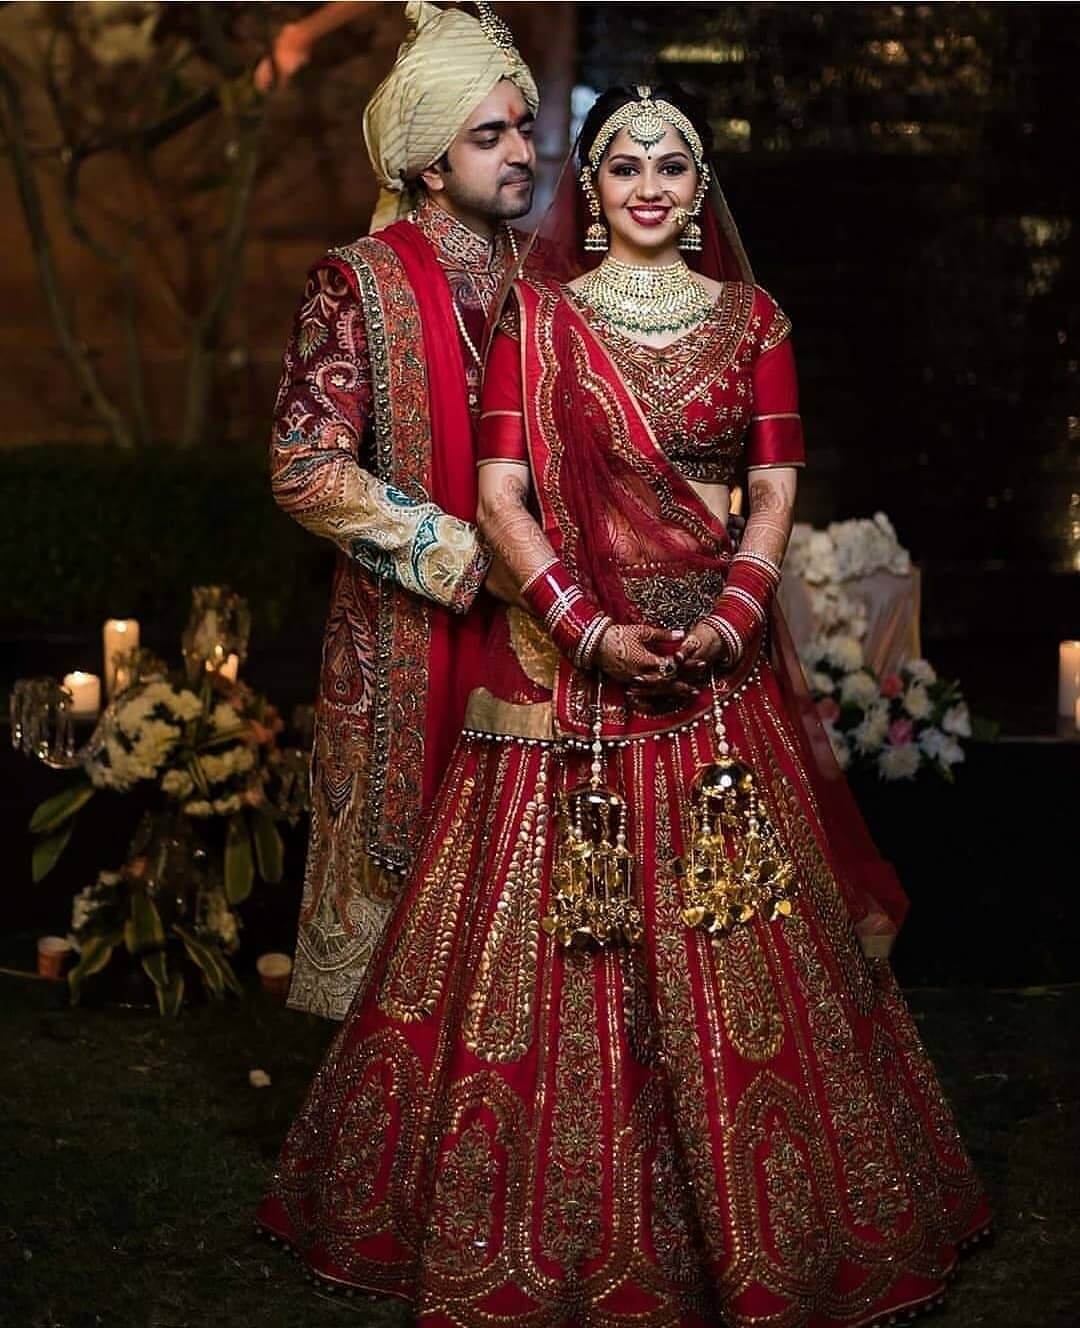 110 Indian Wedding pose ideas  indian wedding indian wedding poses  indian wedding photography